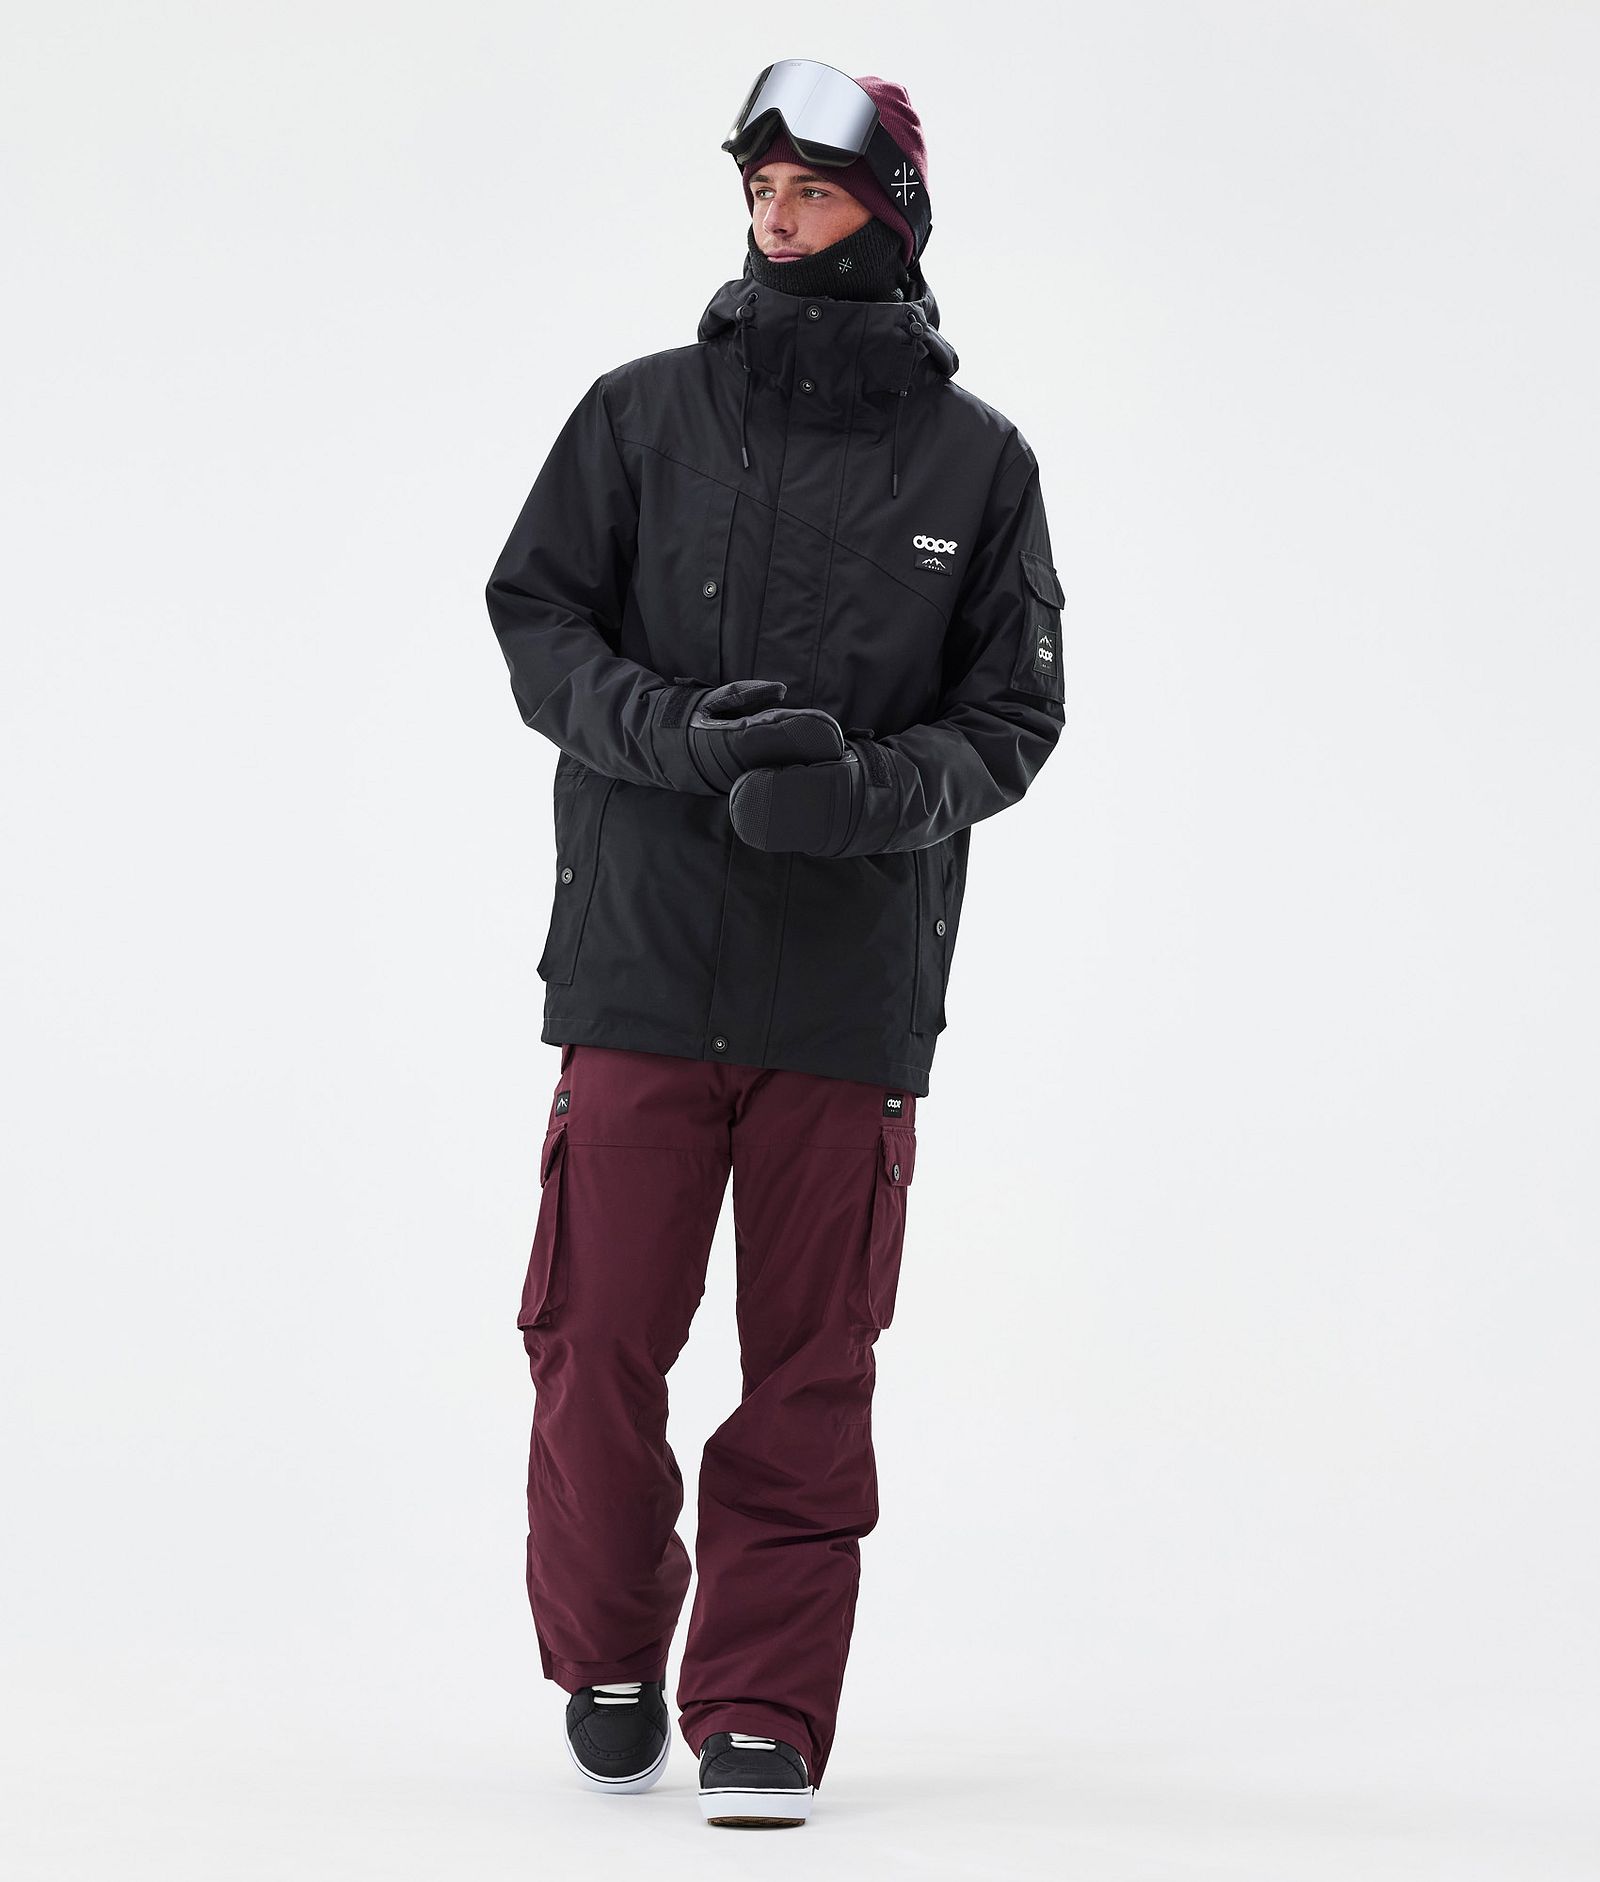 Dope Iconic Pantalon de Snowboard Homme Don Burgundy Renewed